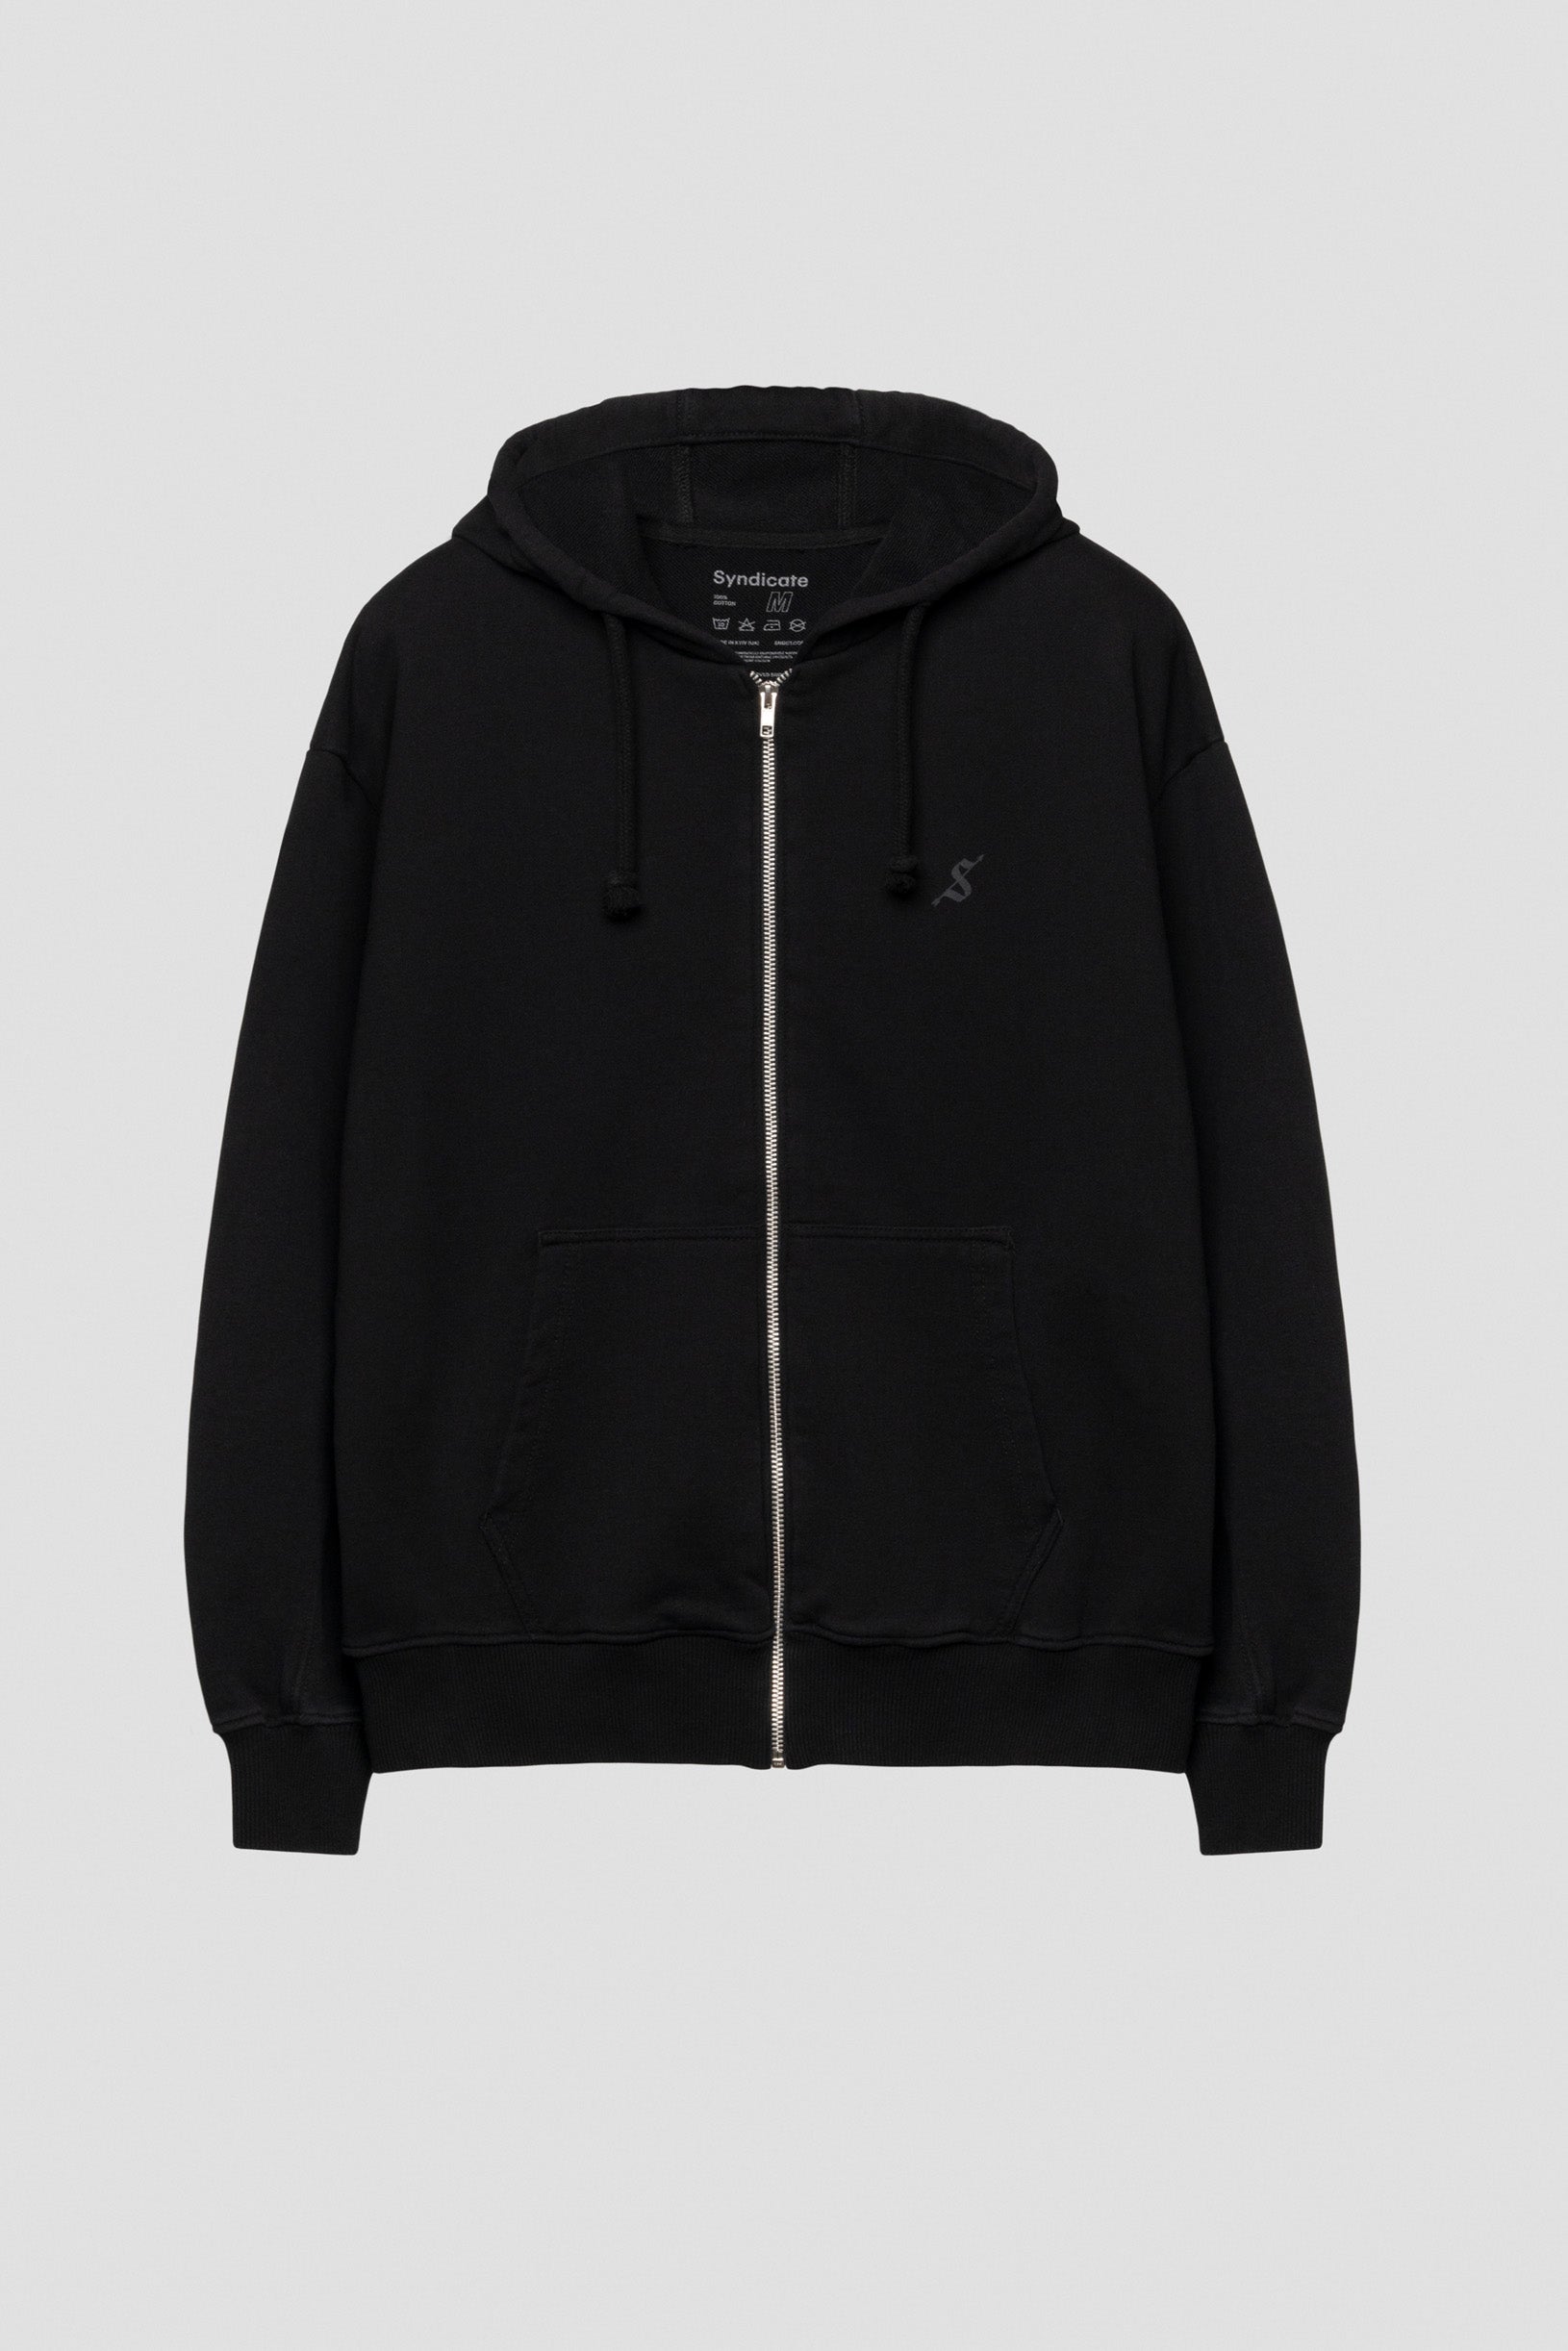 Arrow trainer zip hoodie black